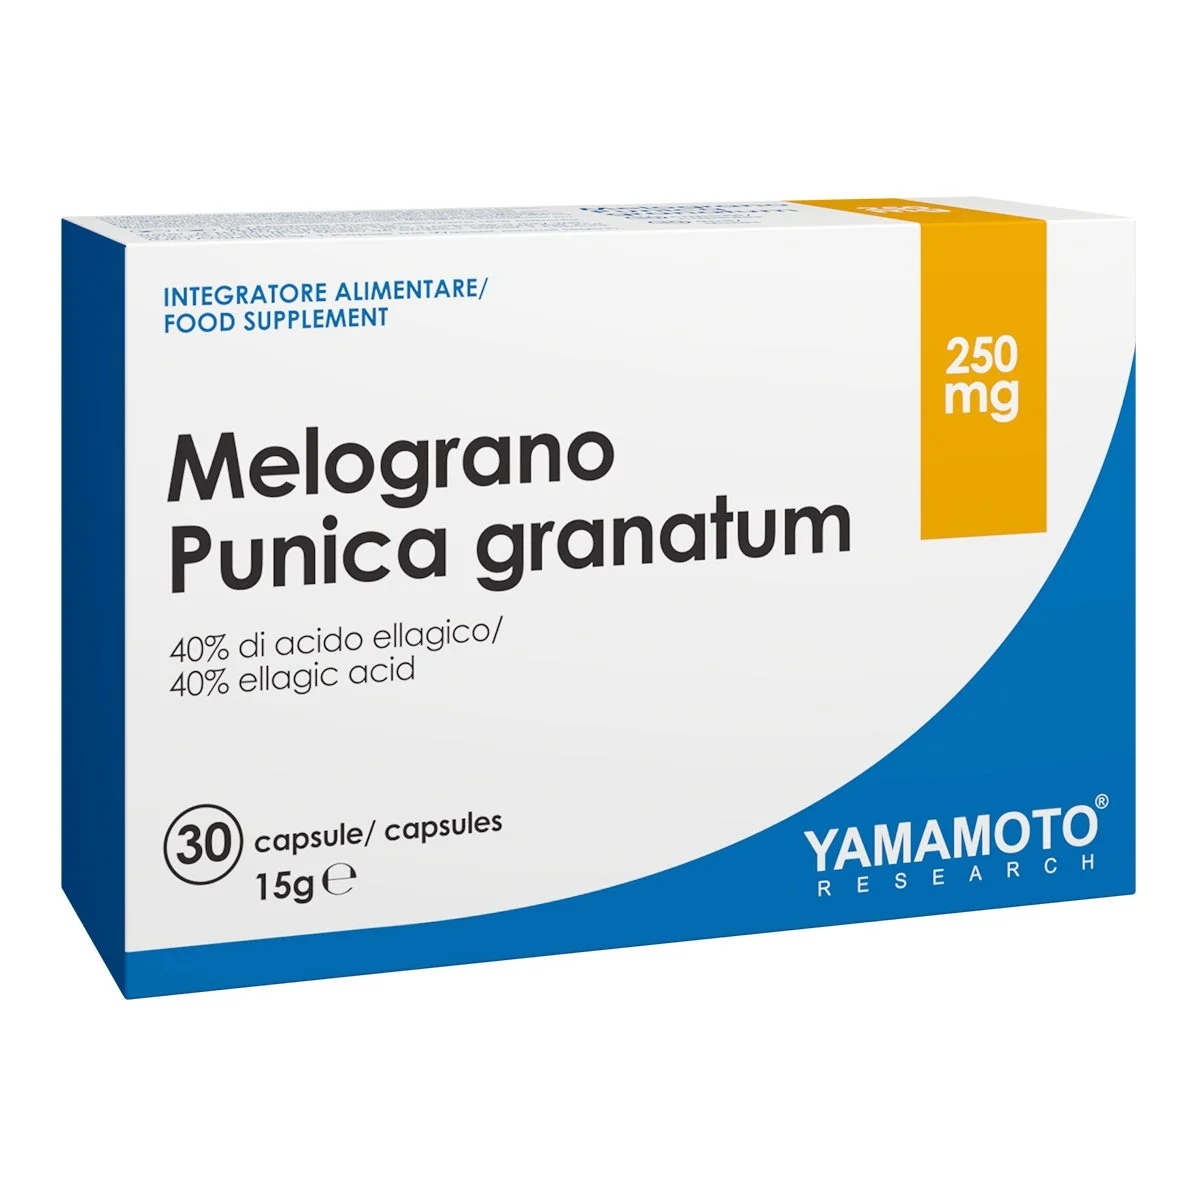 Yamamoto Natural Series Melograno Punica granatum 30 capsules / 30 doses